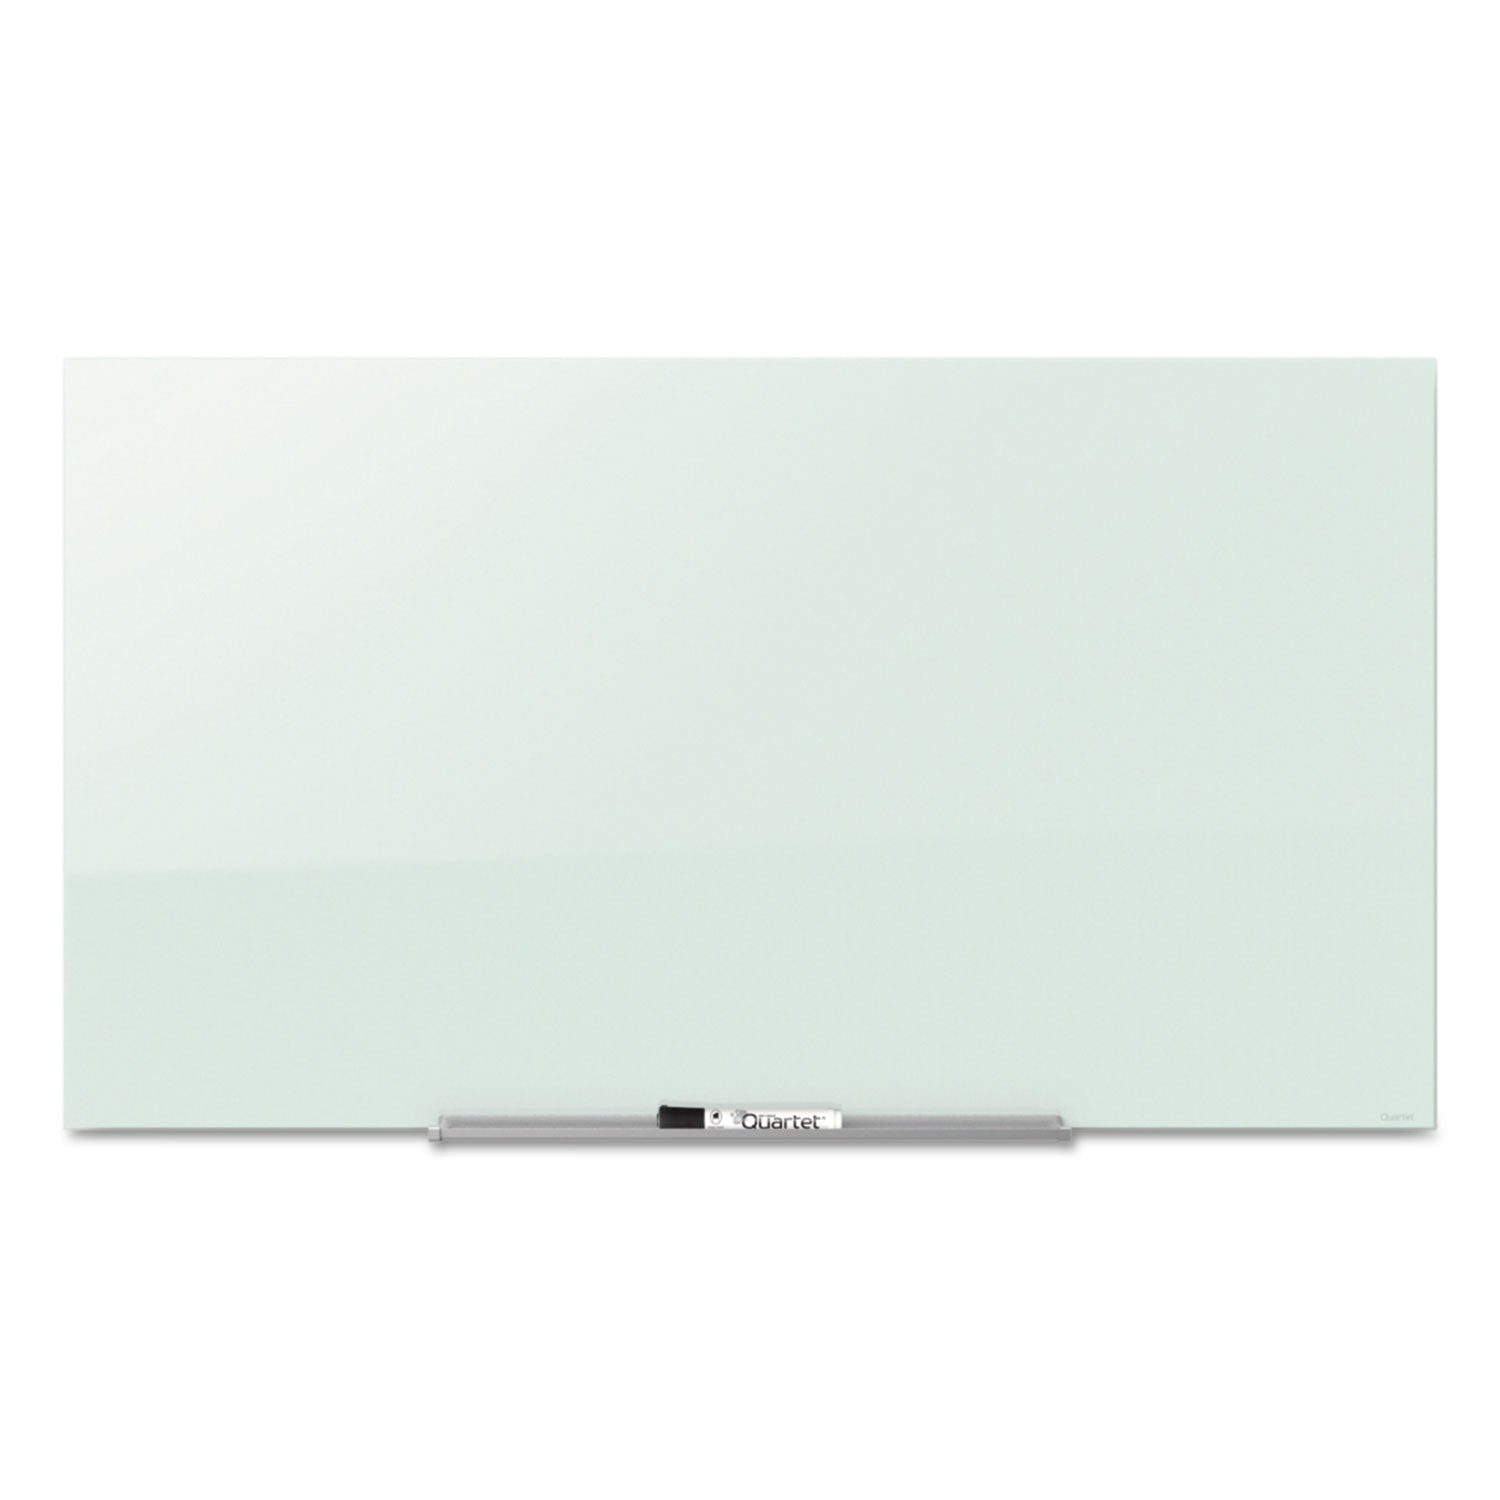 invisamount-magnetic-glass-marker-board-50-x-28-white-surface_qrtg5028imw - 1